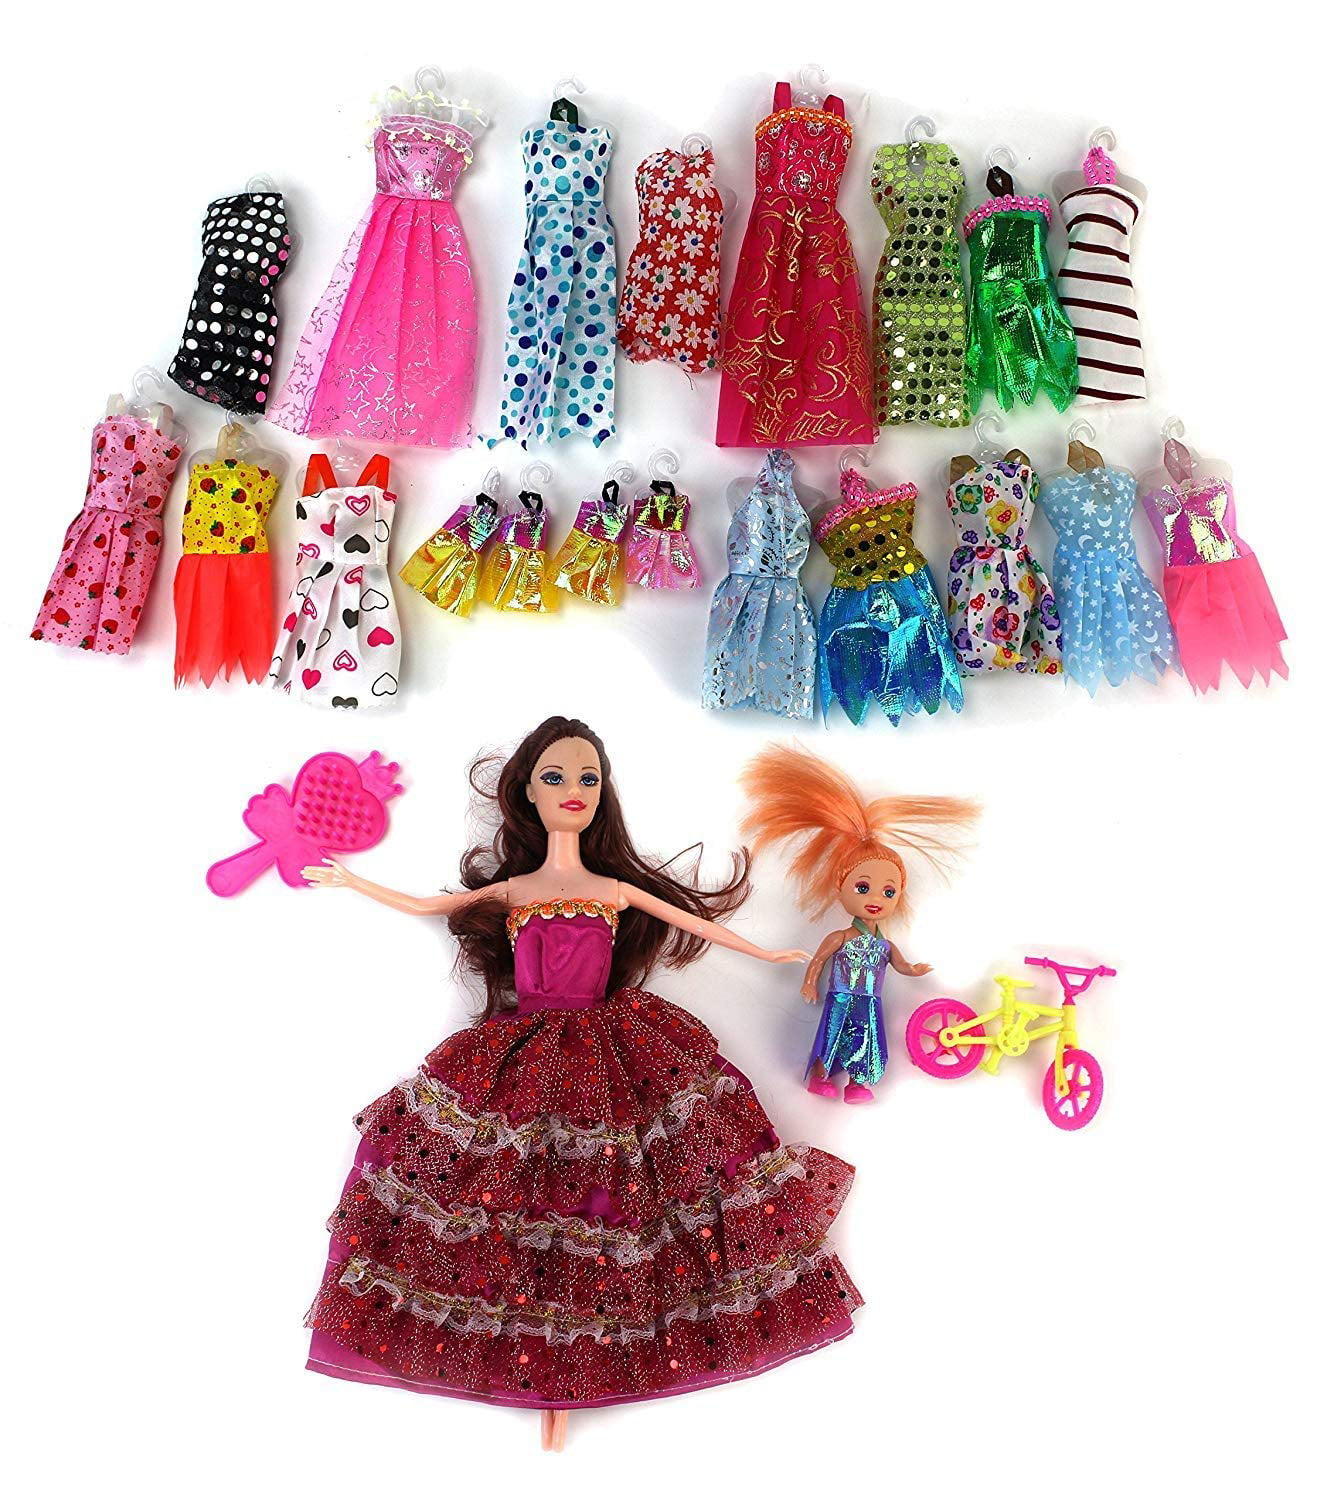 Beauty Fashion Girl Kid's Toy Doll Fashion Variety Wardrobe Set w/ 2